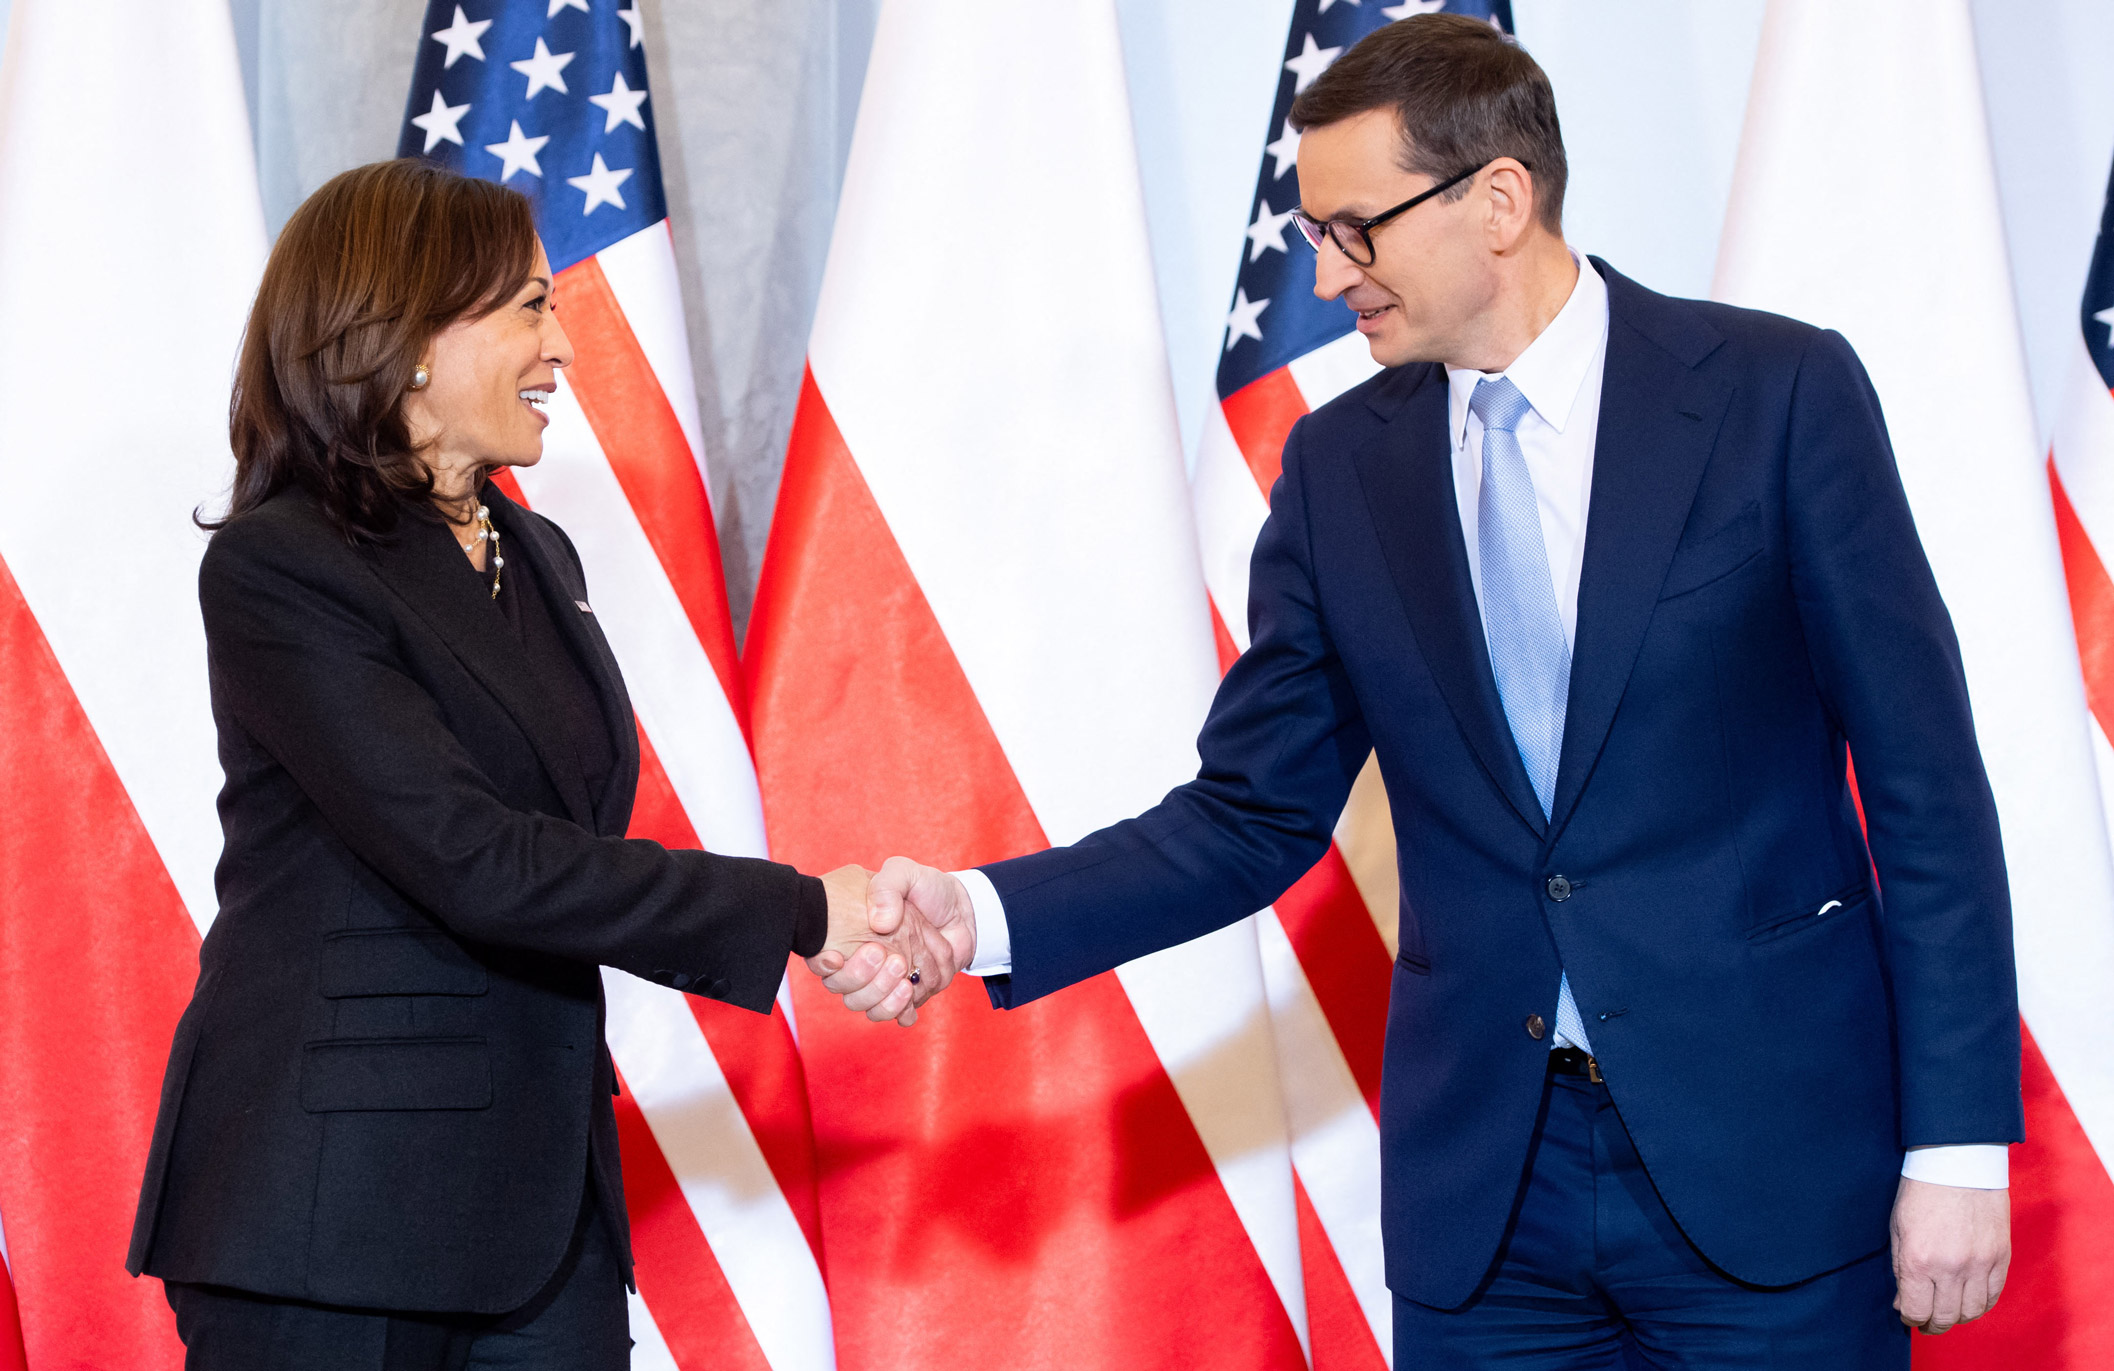 Polish Prime Minister Mateusz Morawiecki greets US Vice President Kamala Harris as she arrives in Warsaw on Thursday.